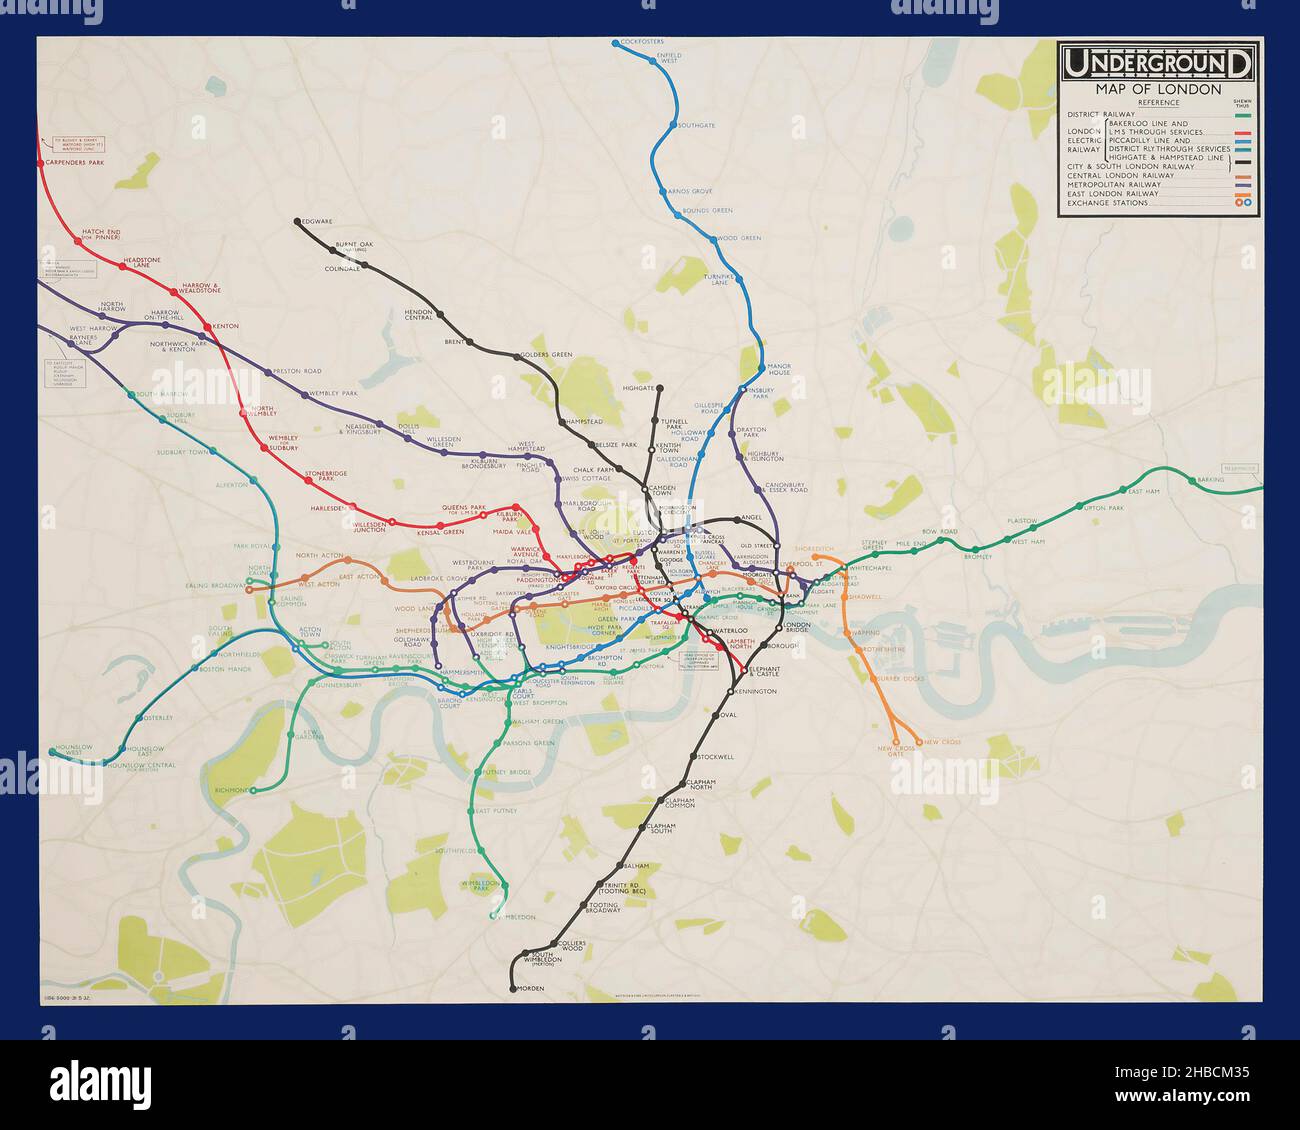 F. H. Stingemore (1890-1954) UNDERGROUND MAP OF LONDON - Vintage advertisement for London transport system, London Underground 1932 Stock Photo